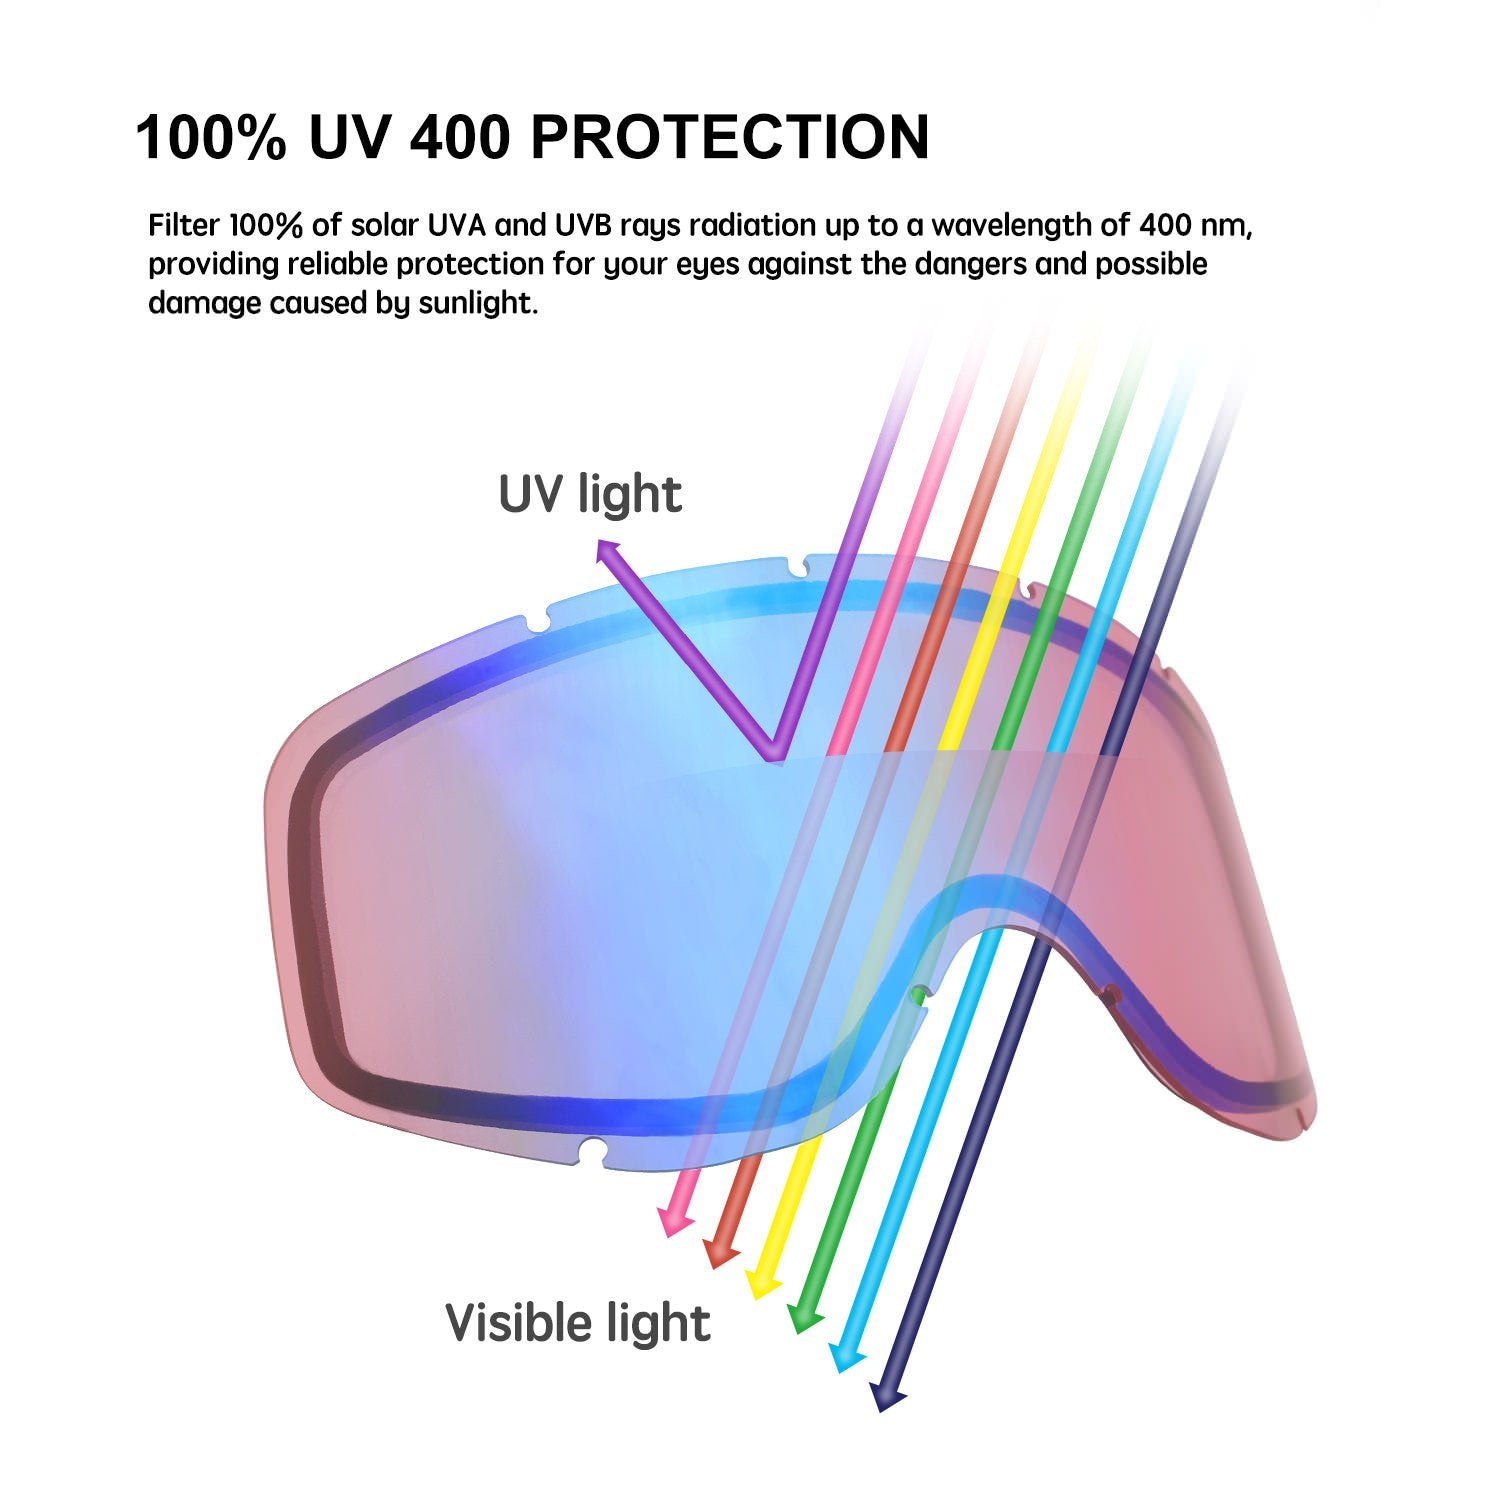 Unigear Ski Goggles, Skido X1, UV Protection Anti-fog Snow/Snowboard